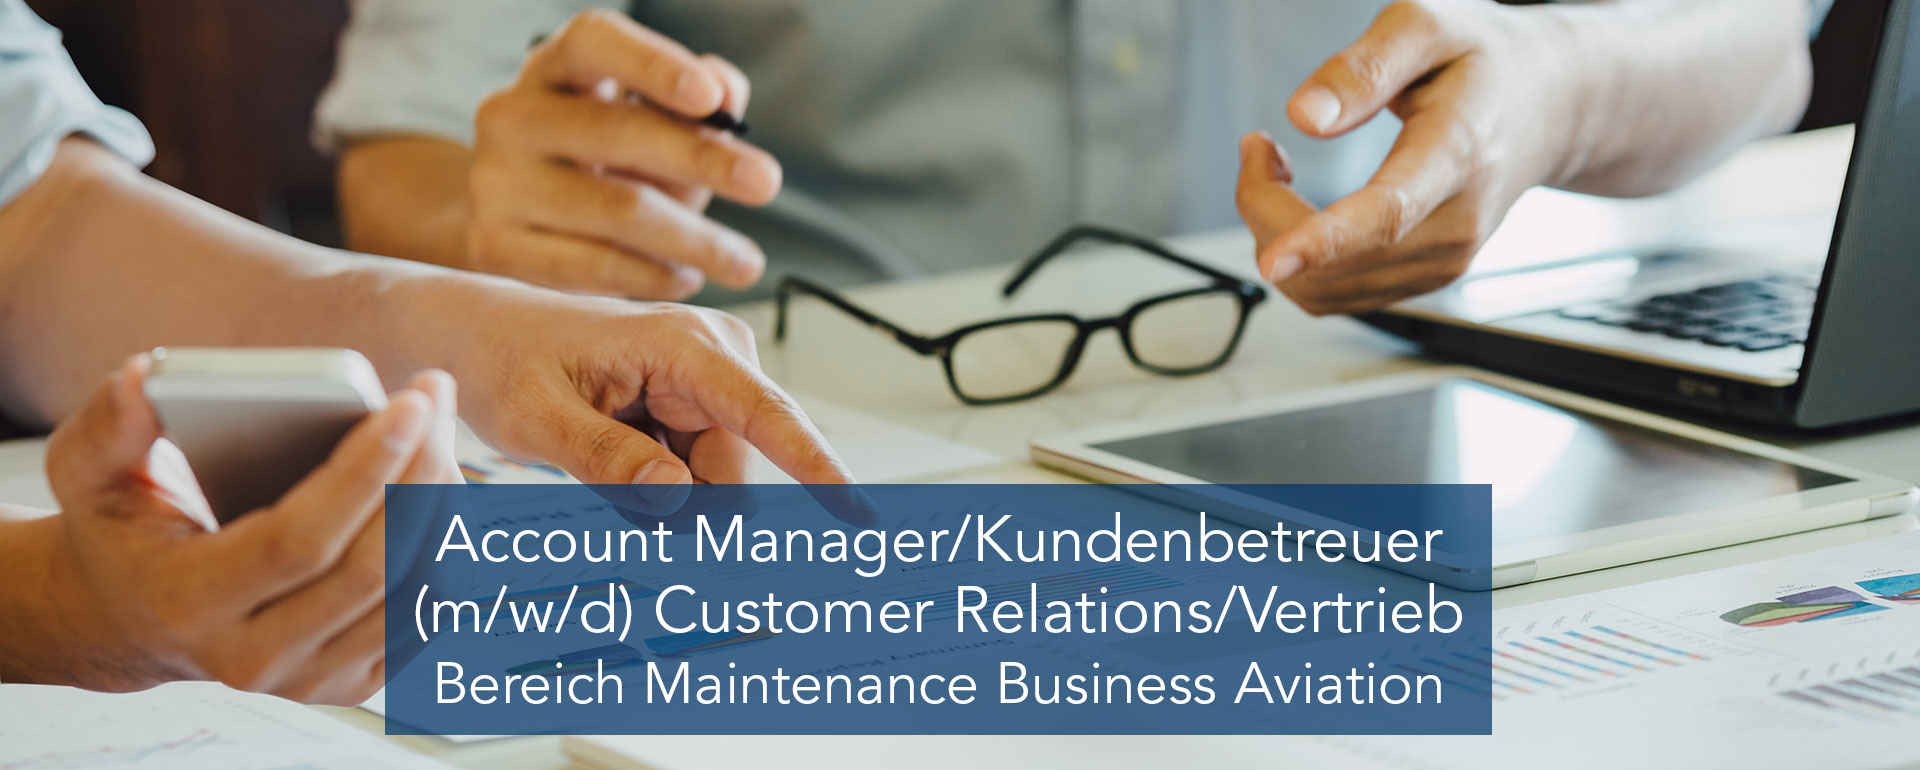 Account Manager/Kundenbetreuer (m/w/d) Customer Relations/Vertrieb im Bereich Maintenance Business Aviation